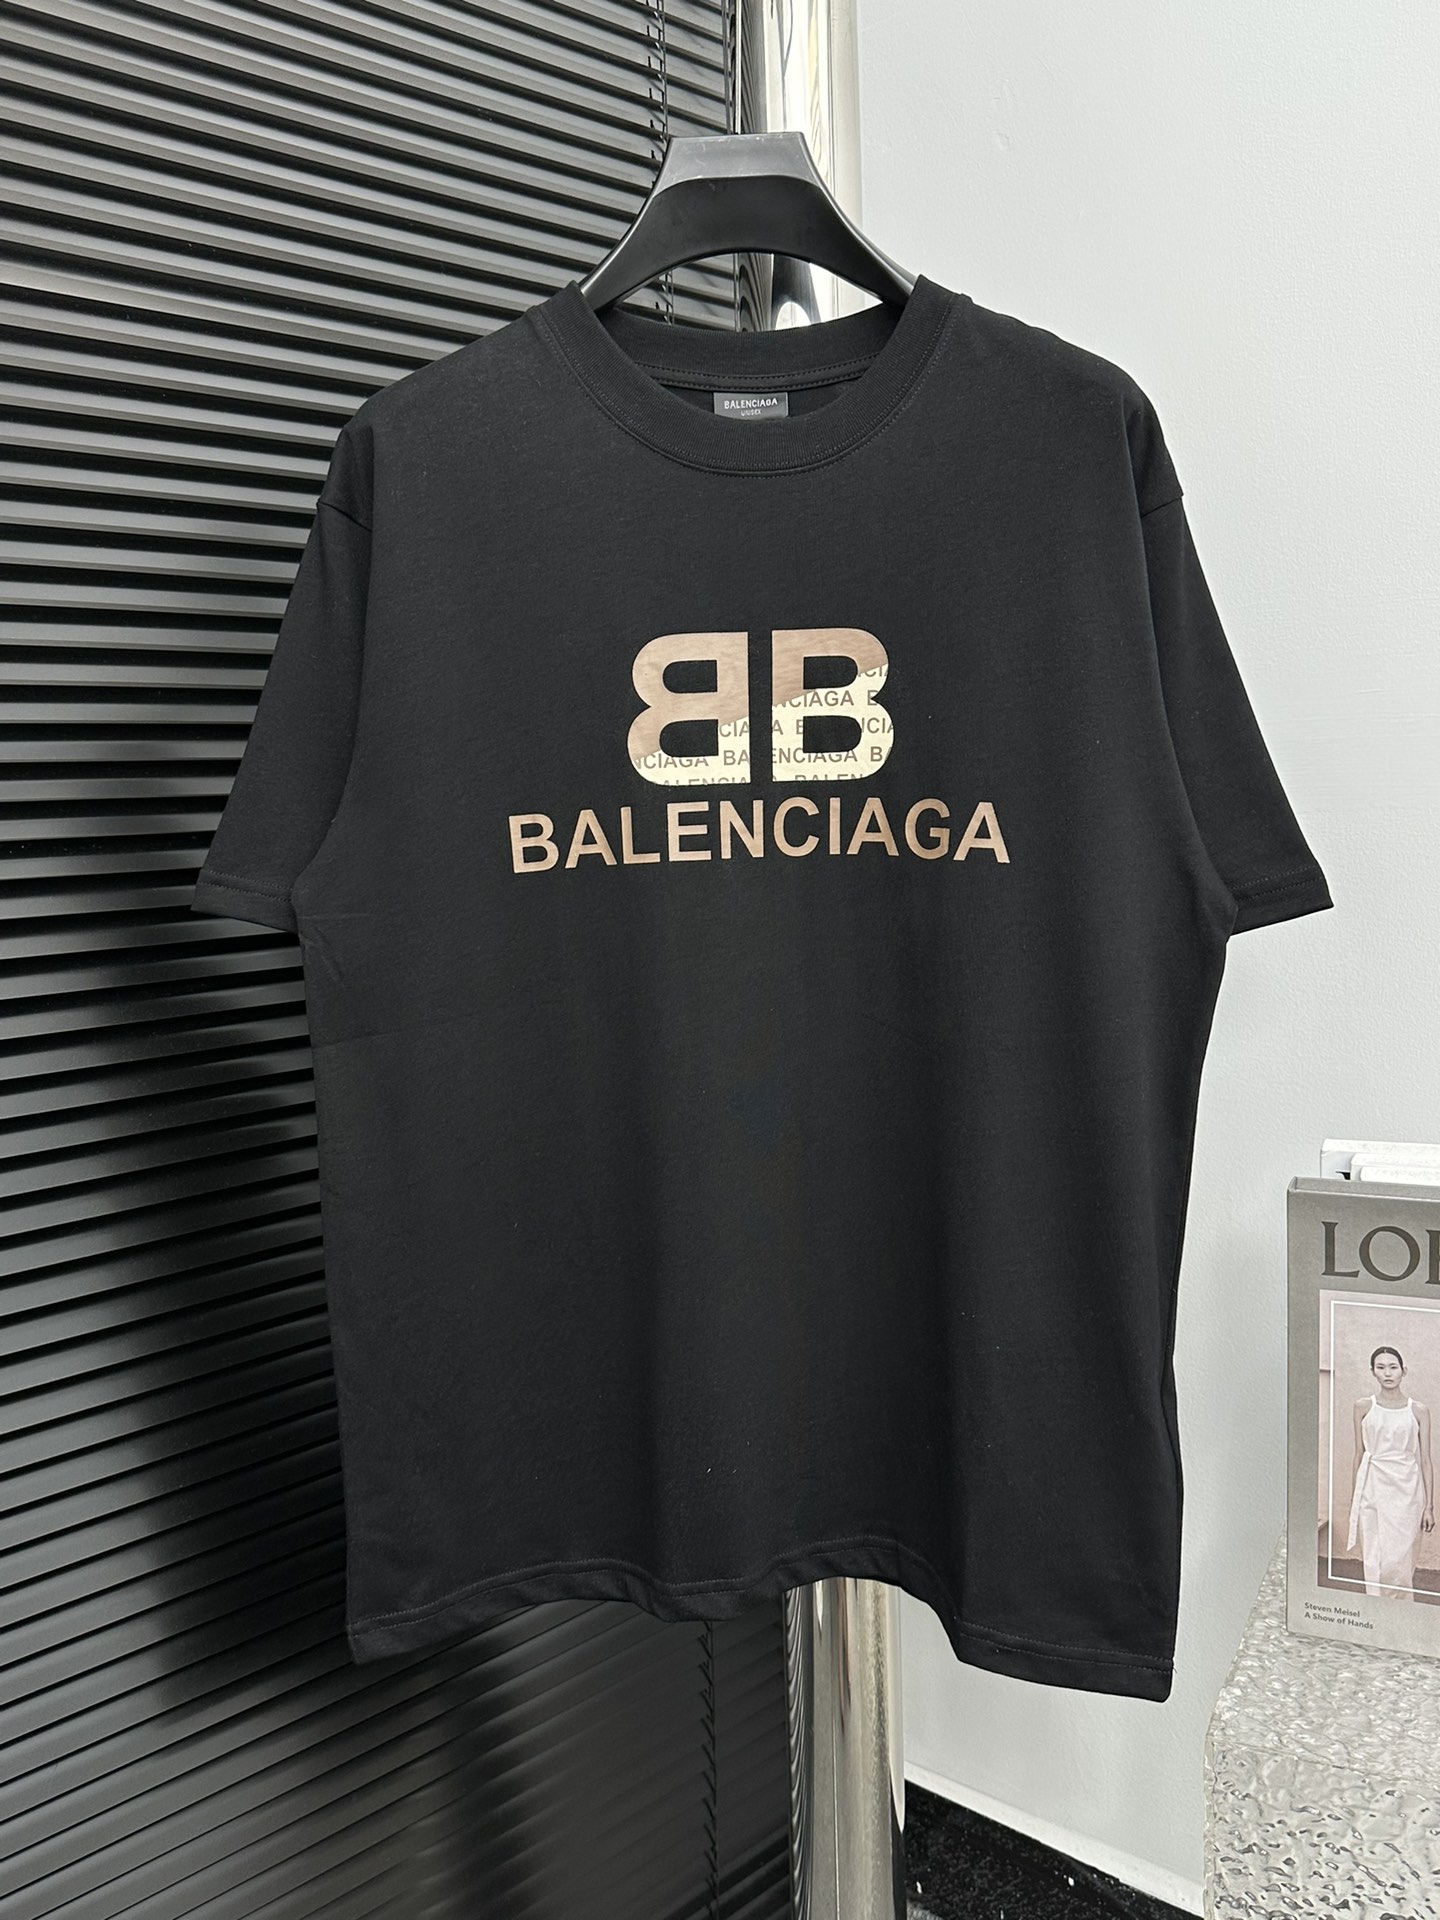 Fake
 Balenciaga Clothing T-Shirt Black White Cotton Fashion Short Sleeve